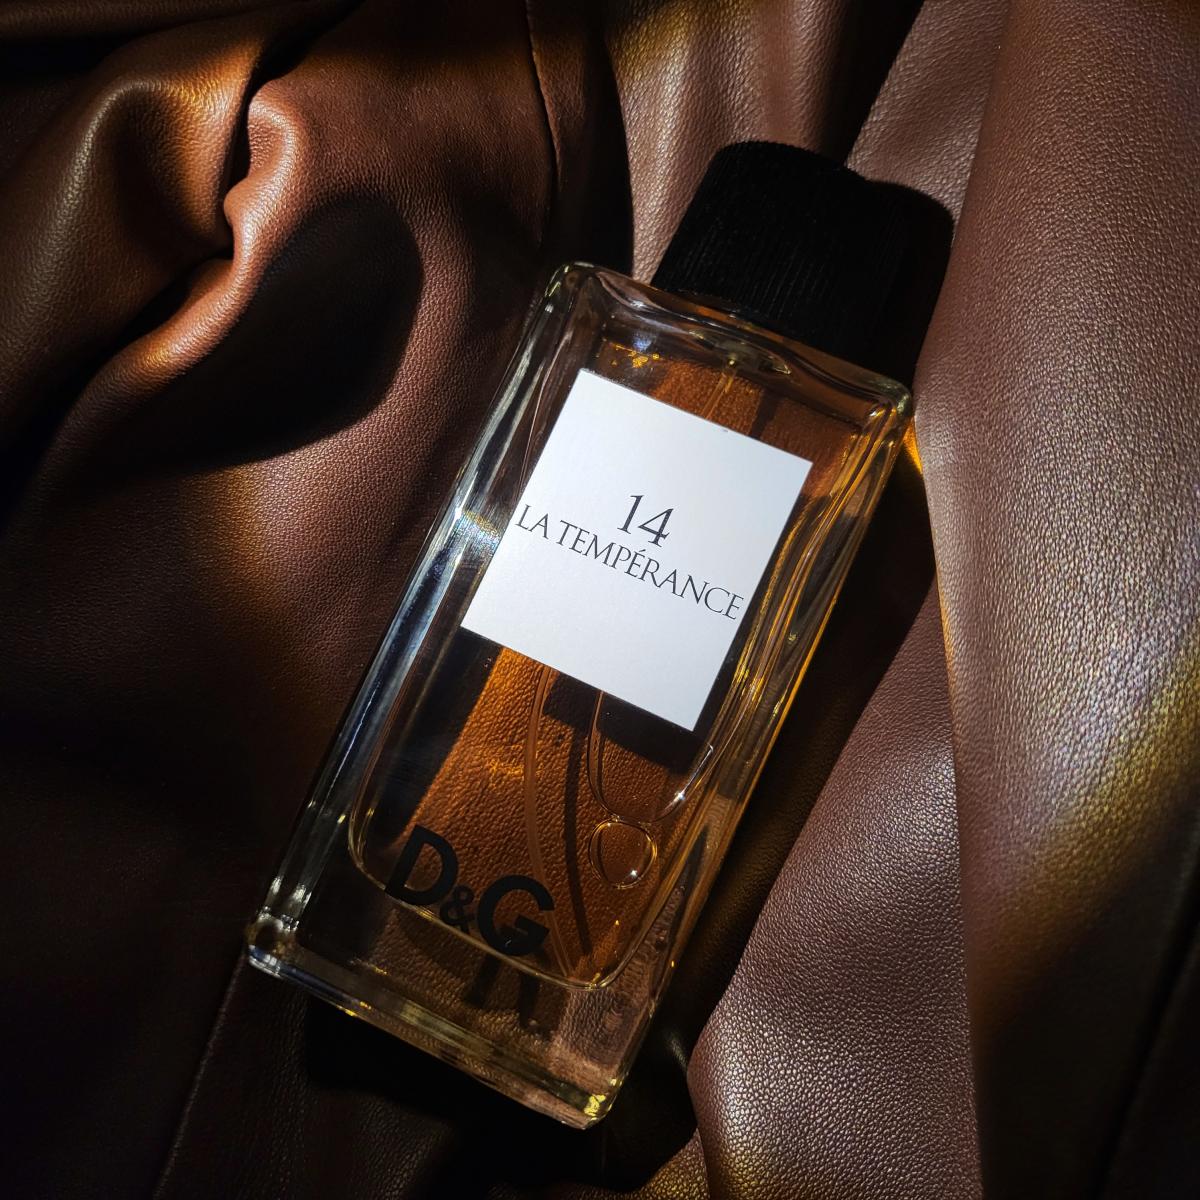 D&G Anthology La Temperance 14 Dolce&Gabbana perfume - a fragrance for ...